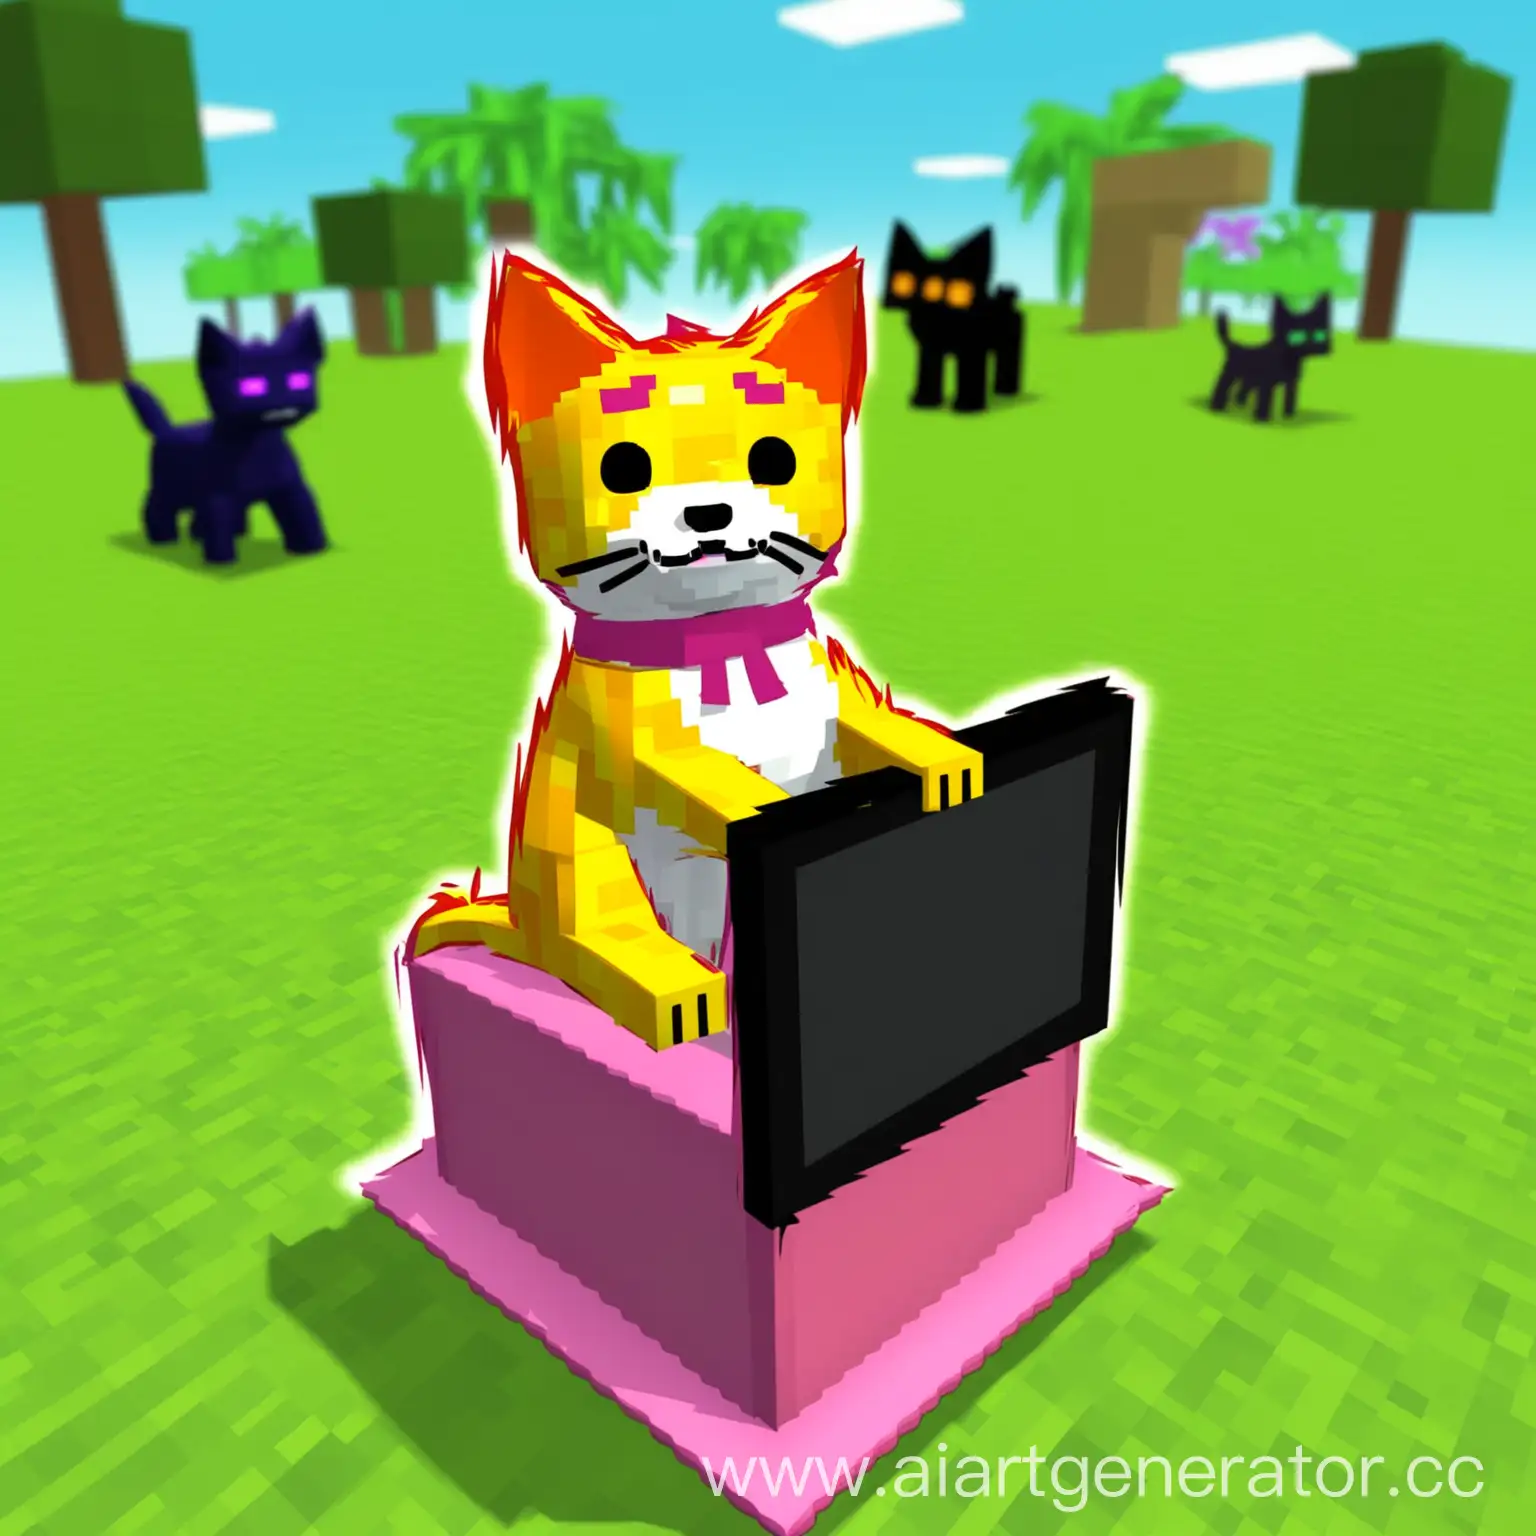 Roblox-Pet-Simulator-Virtual-Pets-Exploring-Colorful-Digital-World